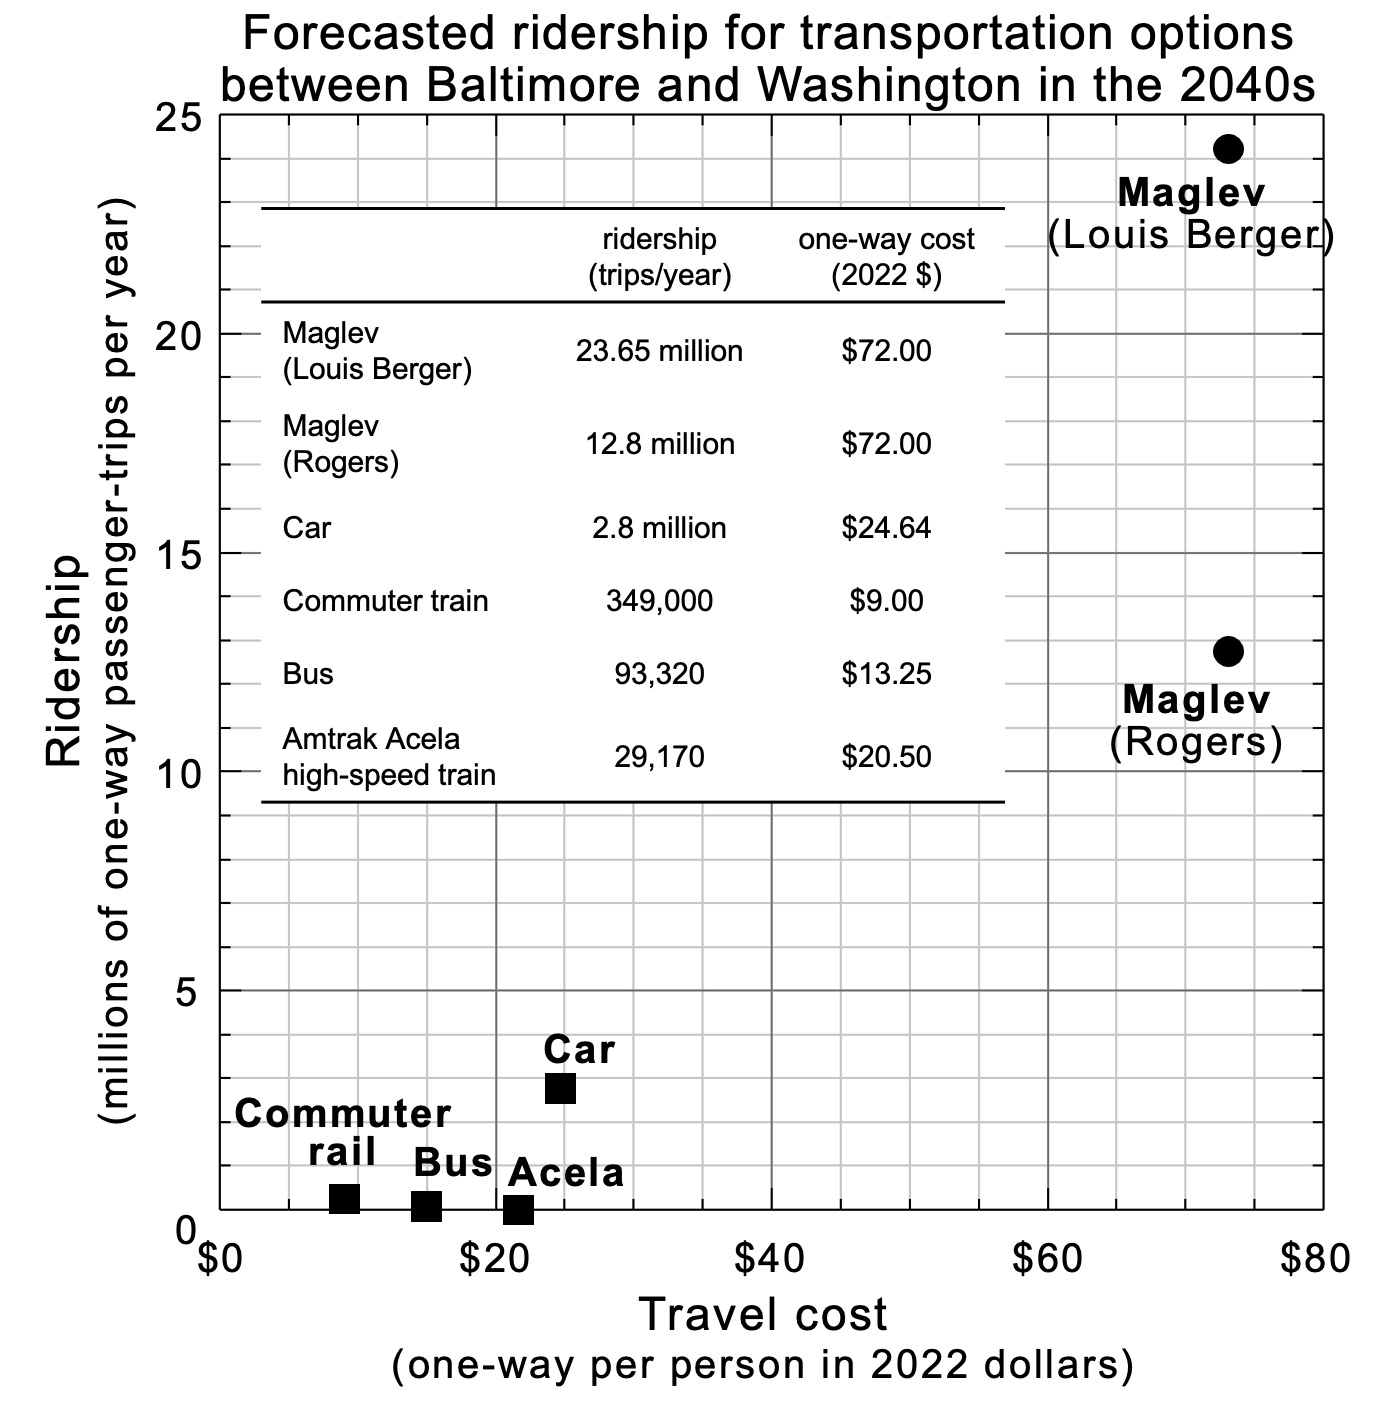 Figure 1. Plot of ridership vs. travel cost